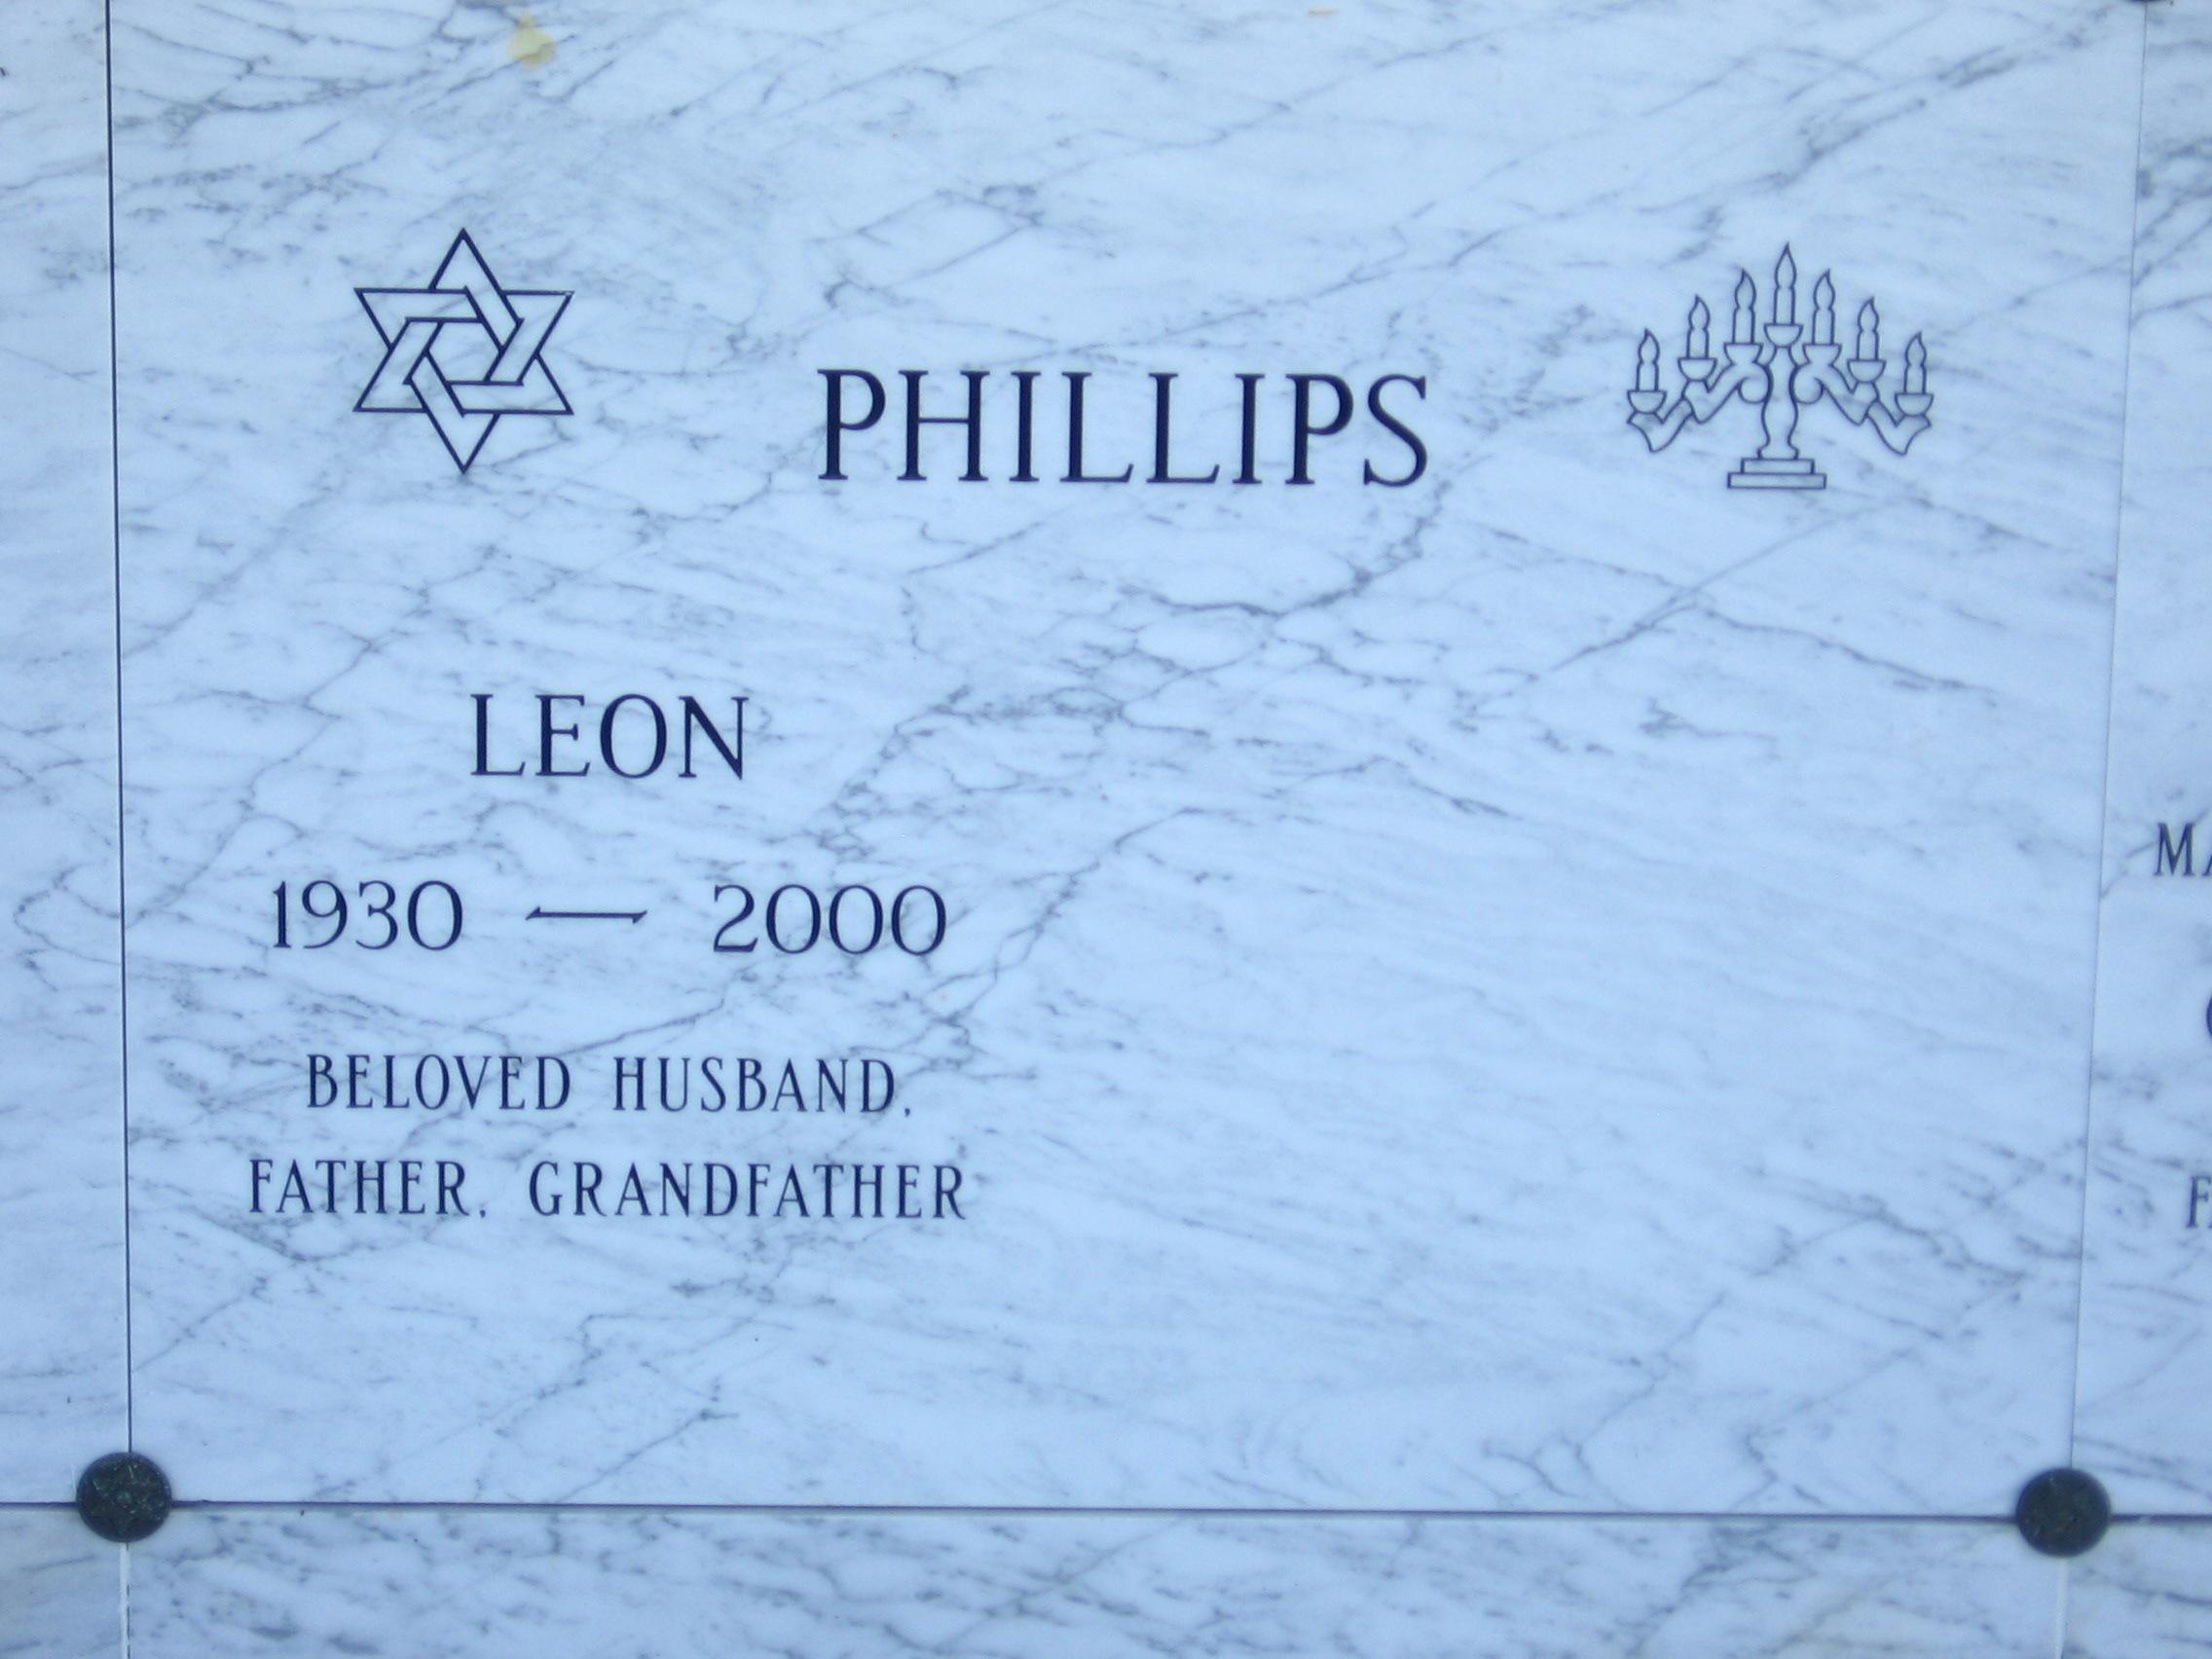 Leon Phillips